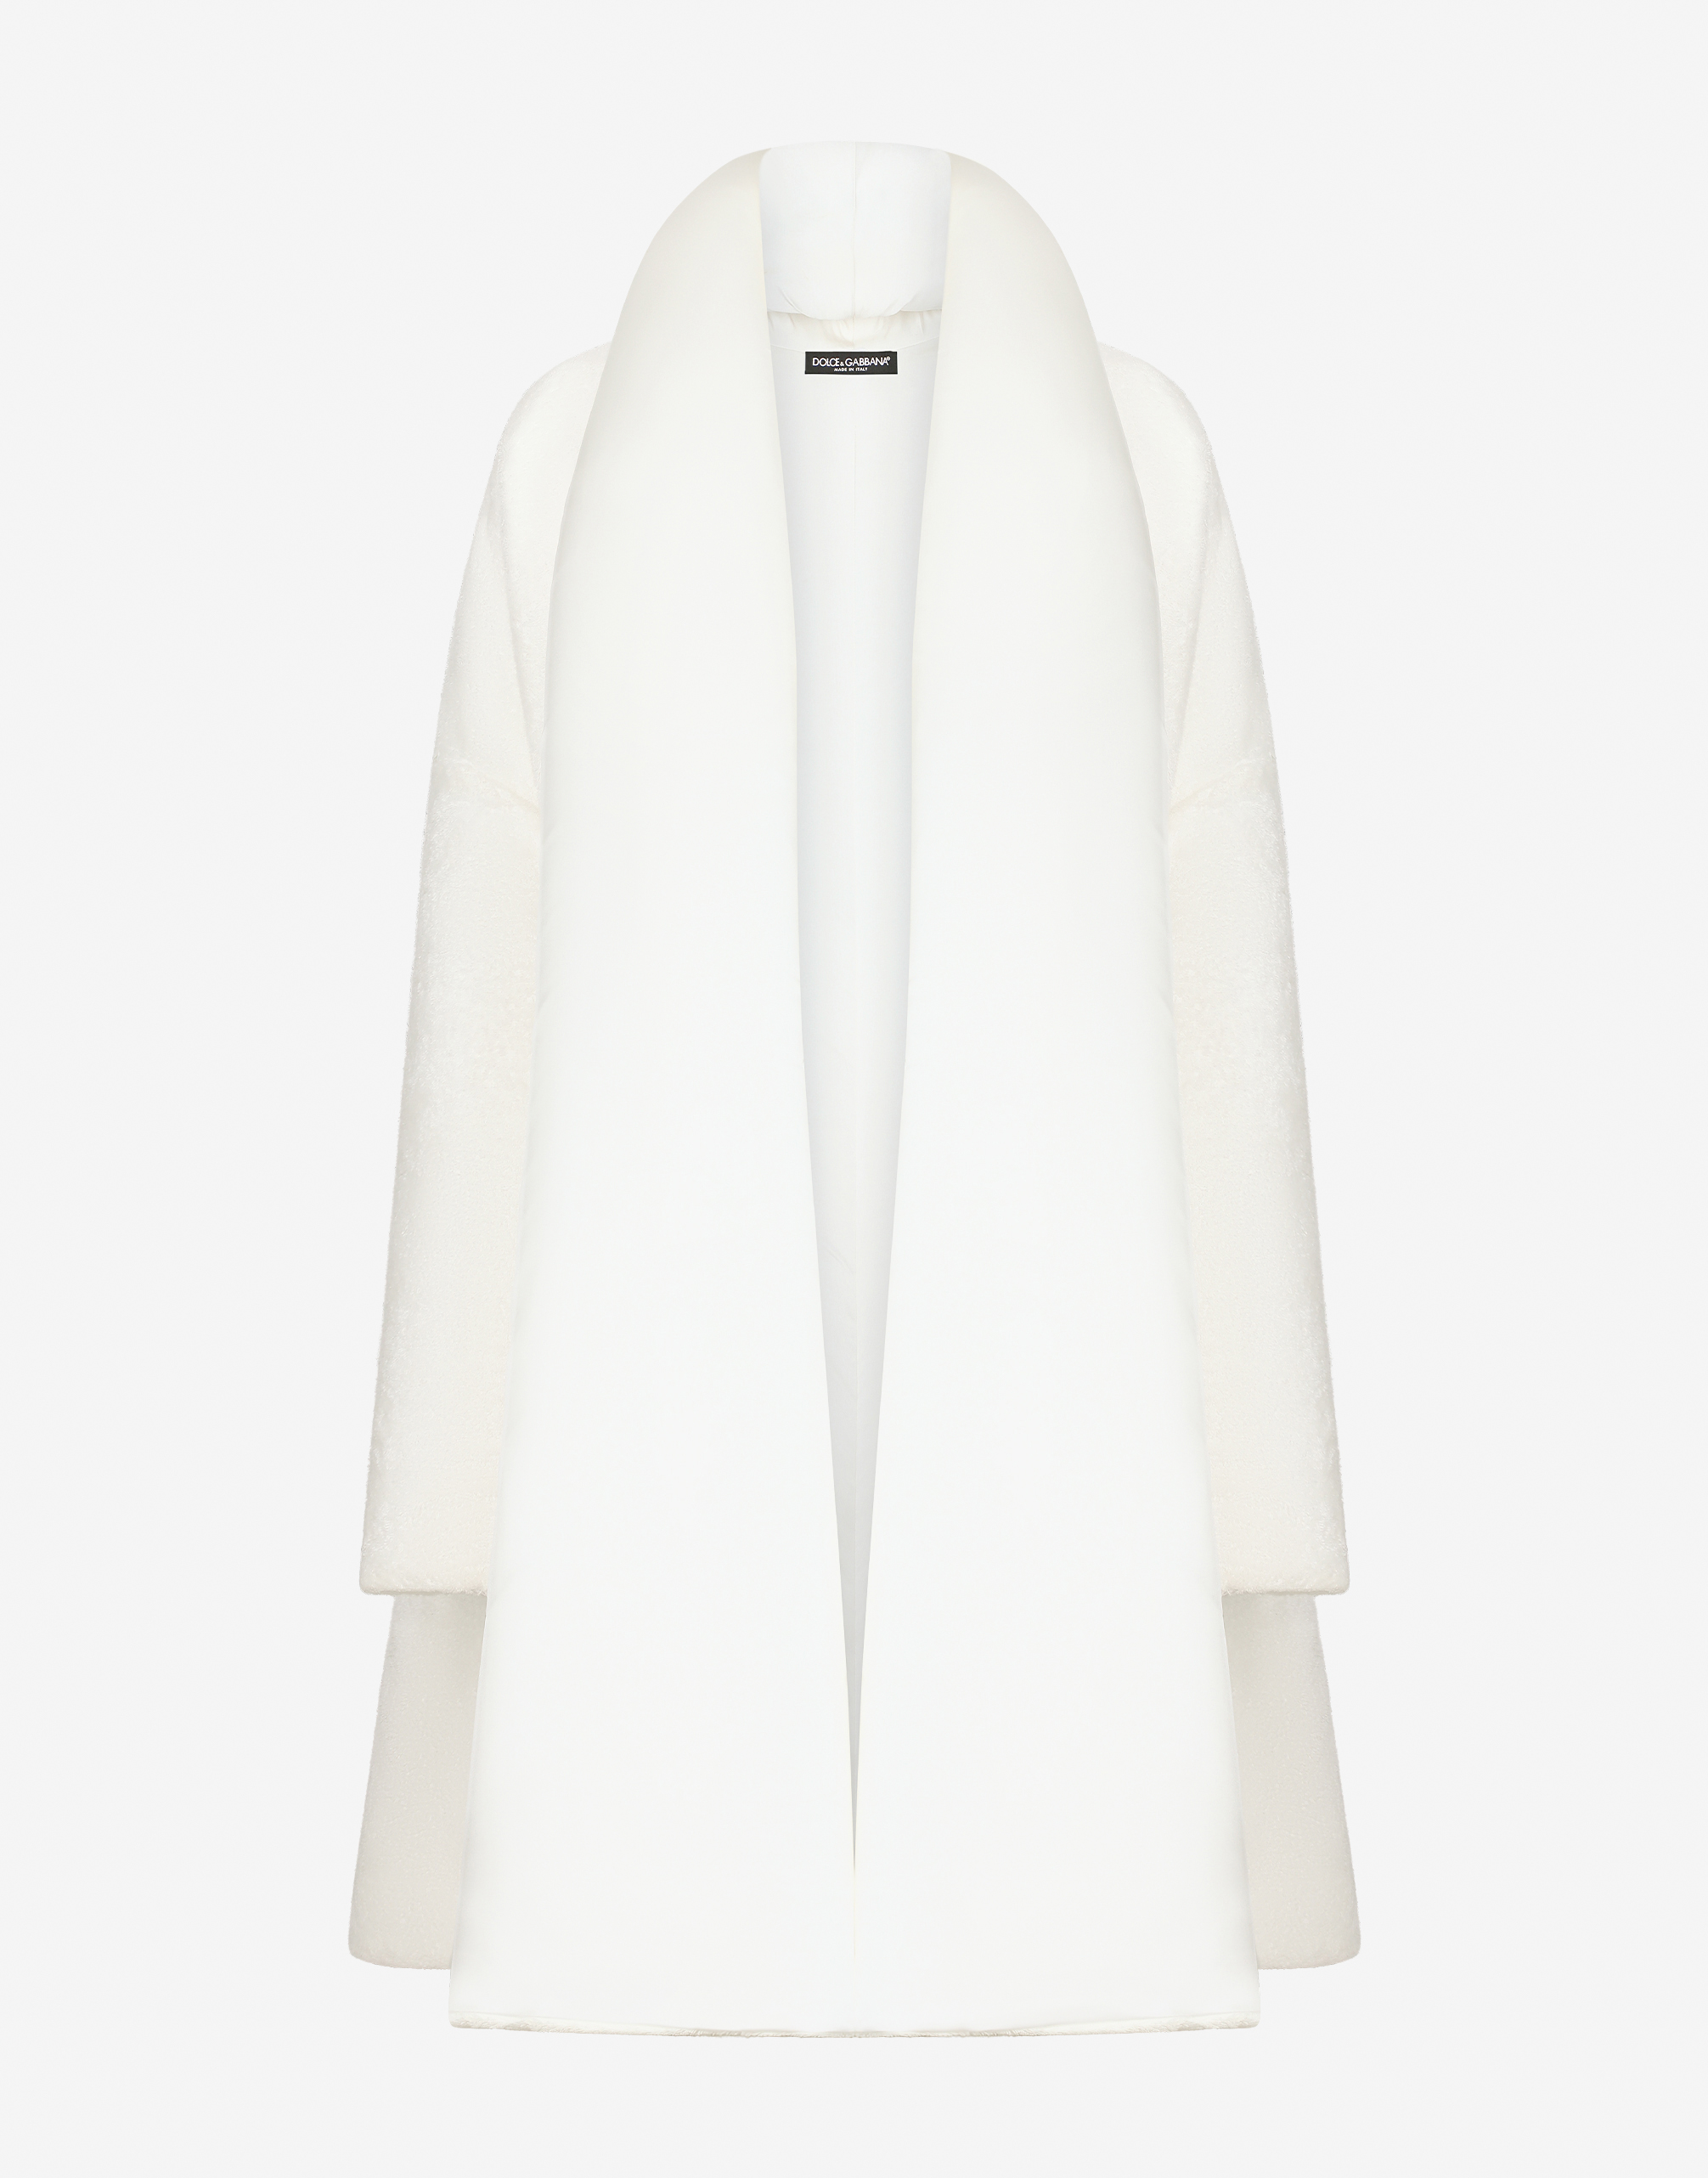 KIM DOLCE&GABBANA Terrycloth coat in White